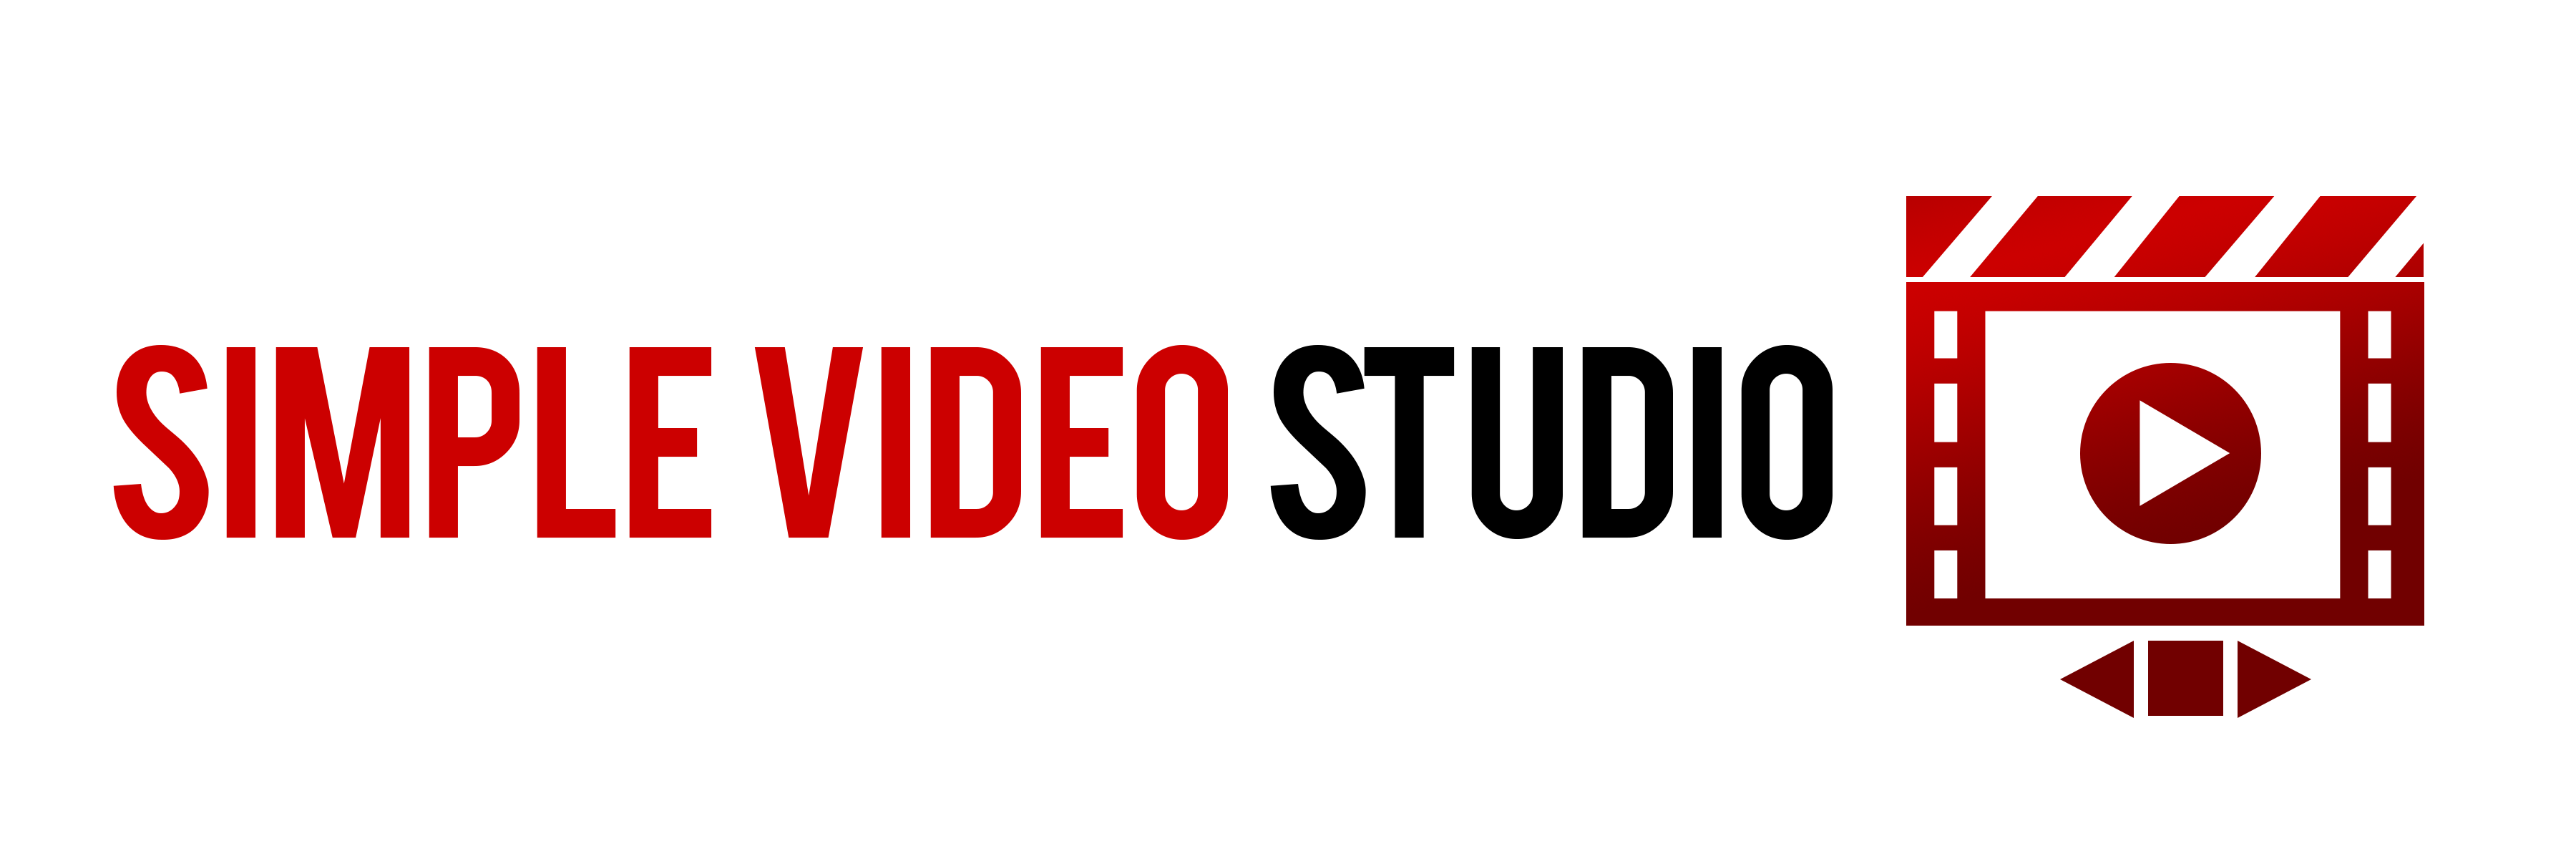 Simple Video Studio logo